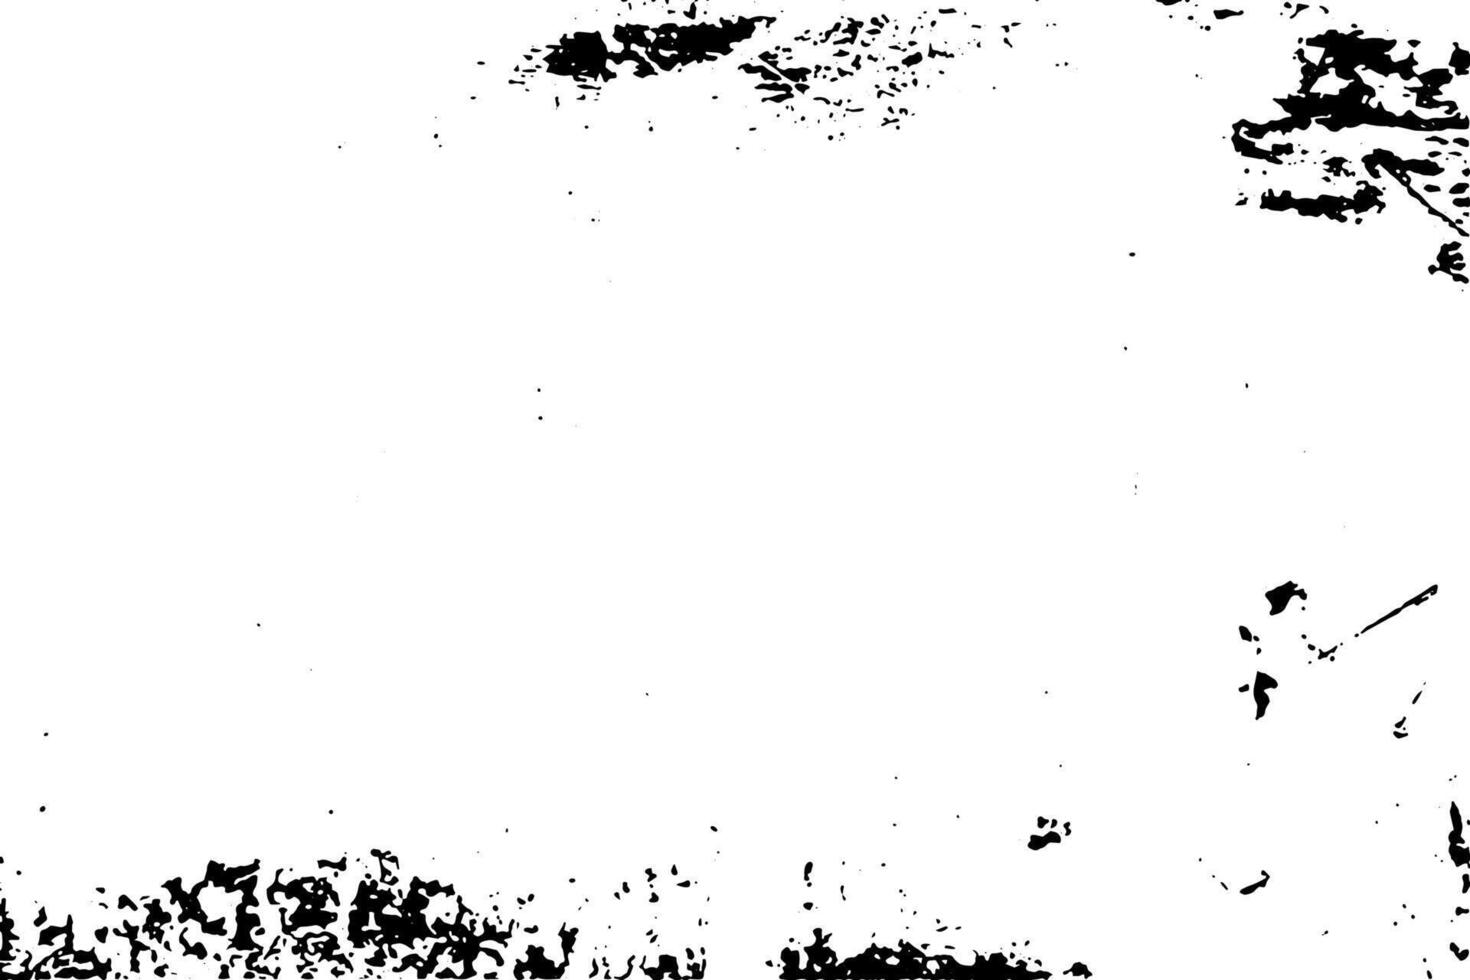 grunge Preto e branco urbano textura modelo. abstrato angustiado sobreposição textura vetor